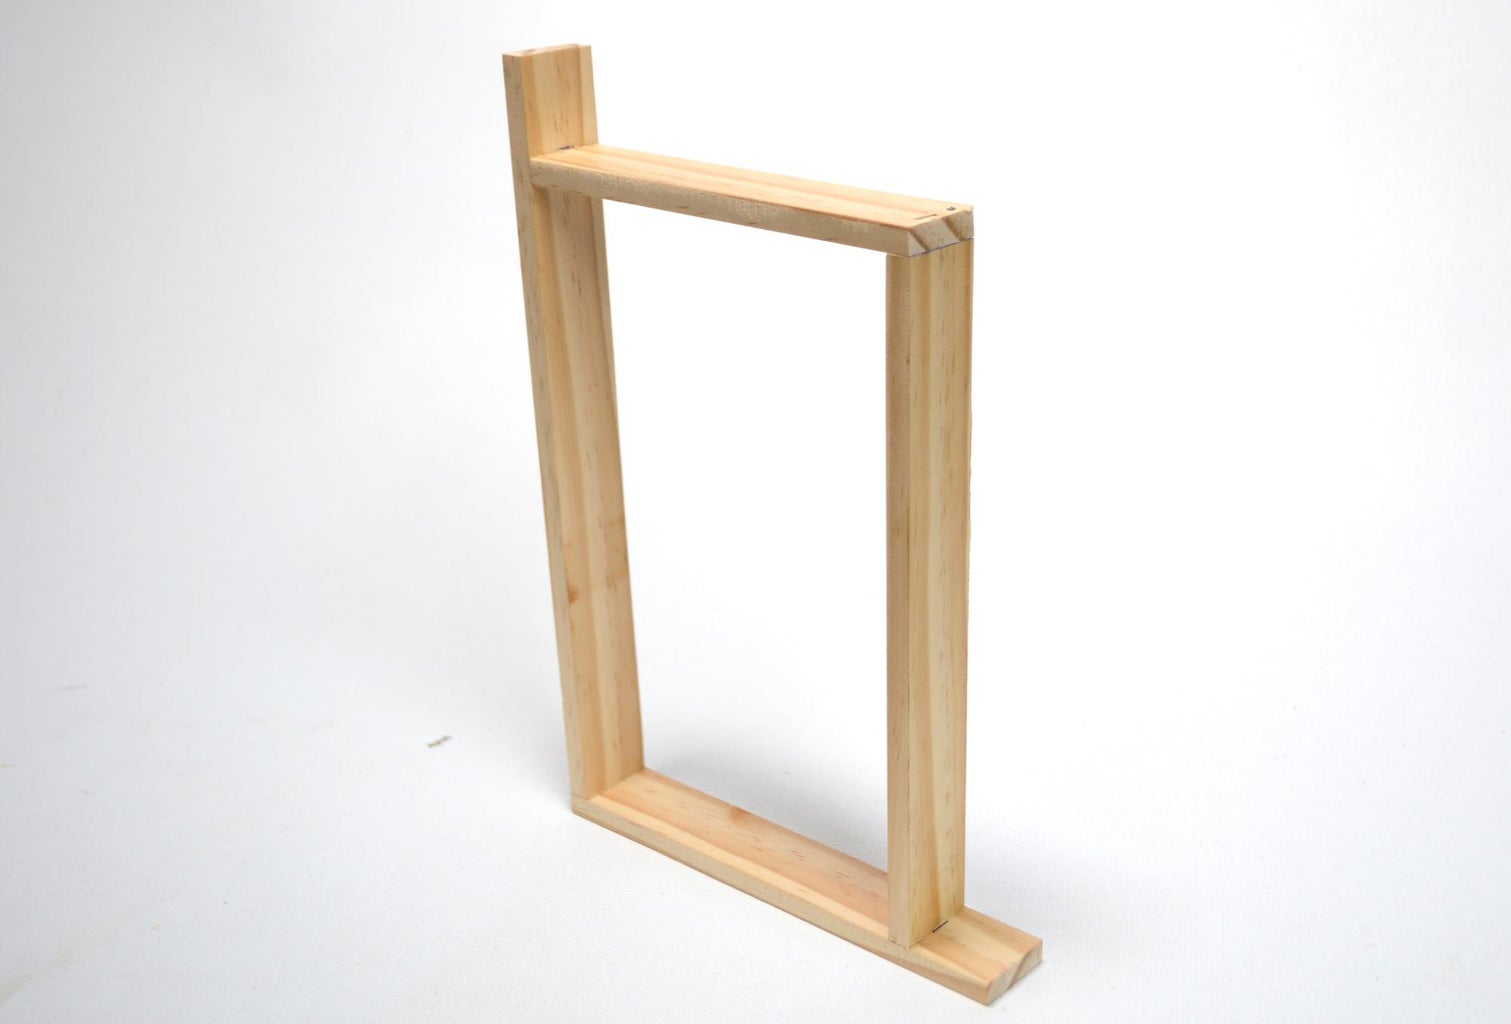 Making the Internal Wood Frame - Part 2